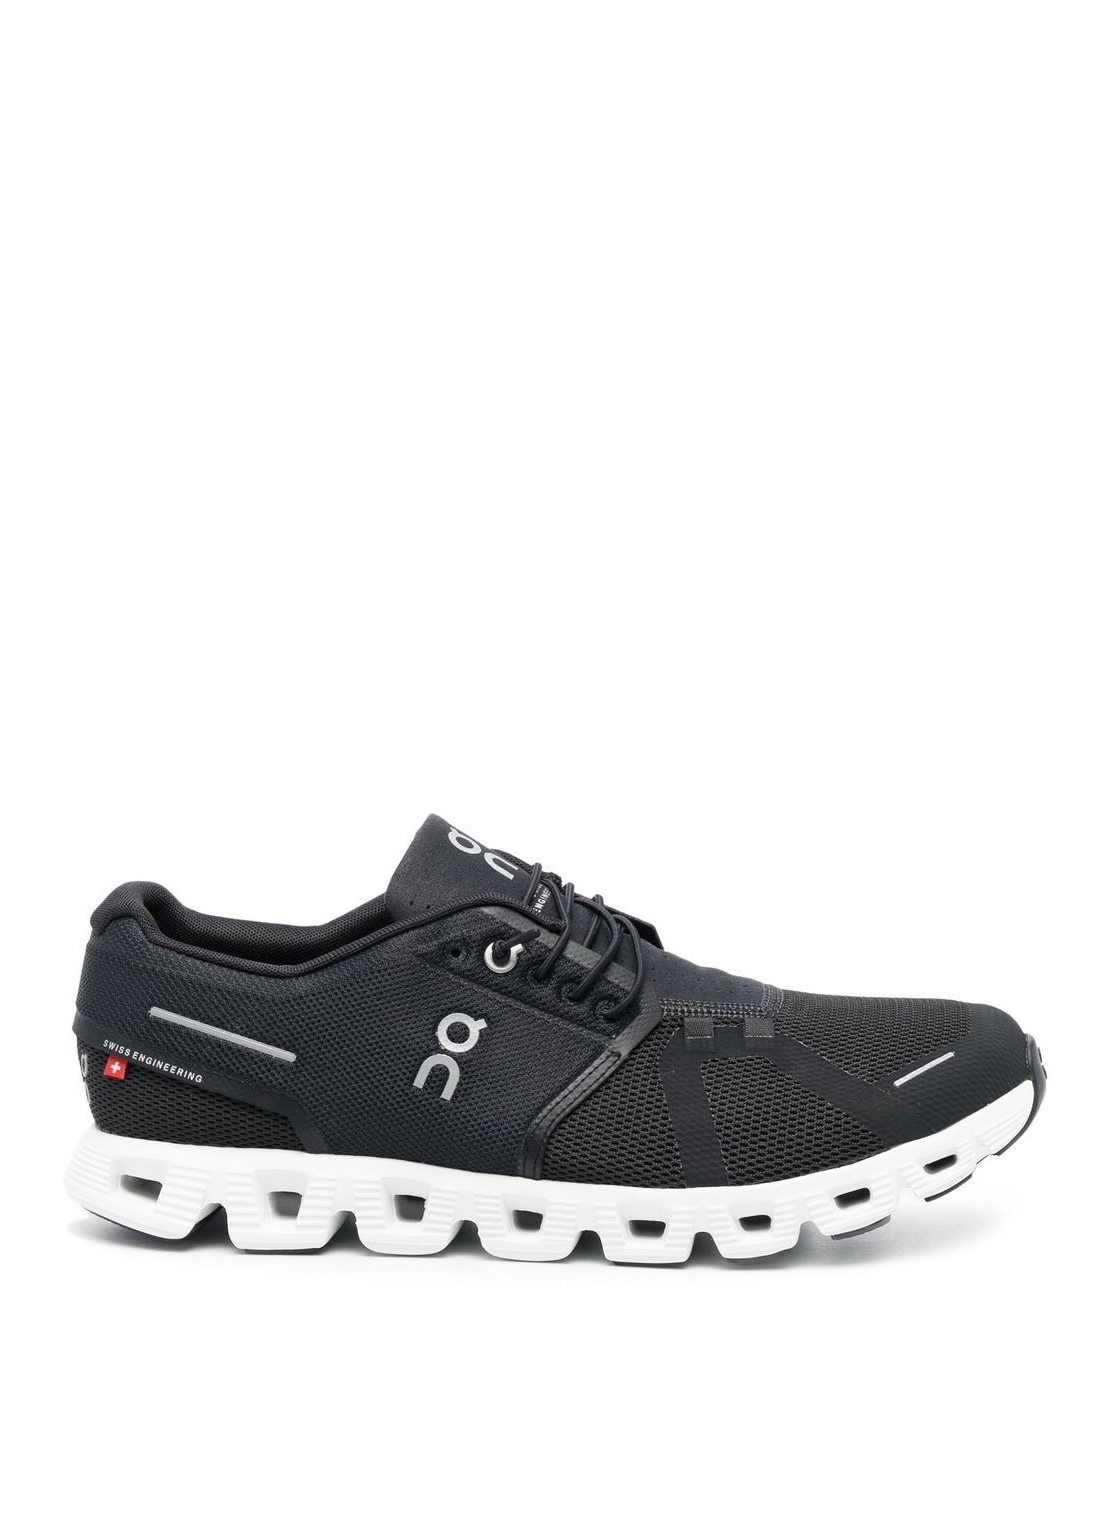 Sneaker on running sneaker man cloud 5 men 5998919 black white talla 44
 